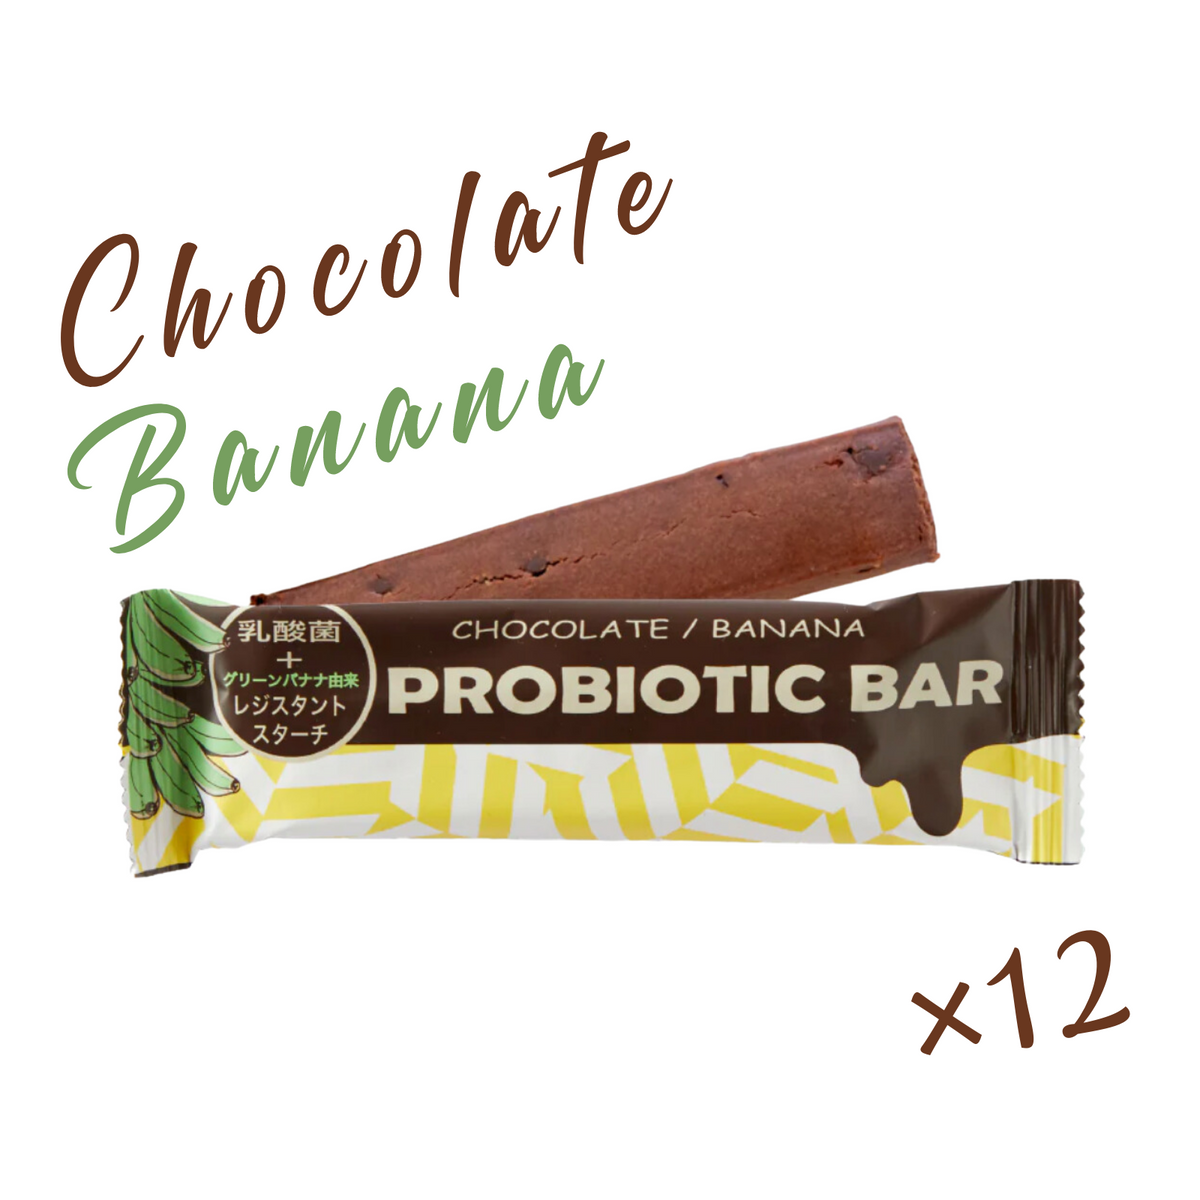 Probiotic Bar Chocolate Banana Chocolate Banana (12 per box)